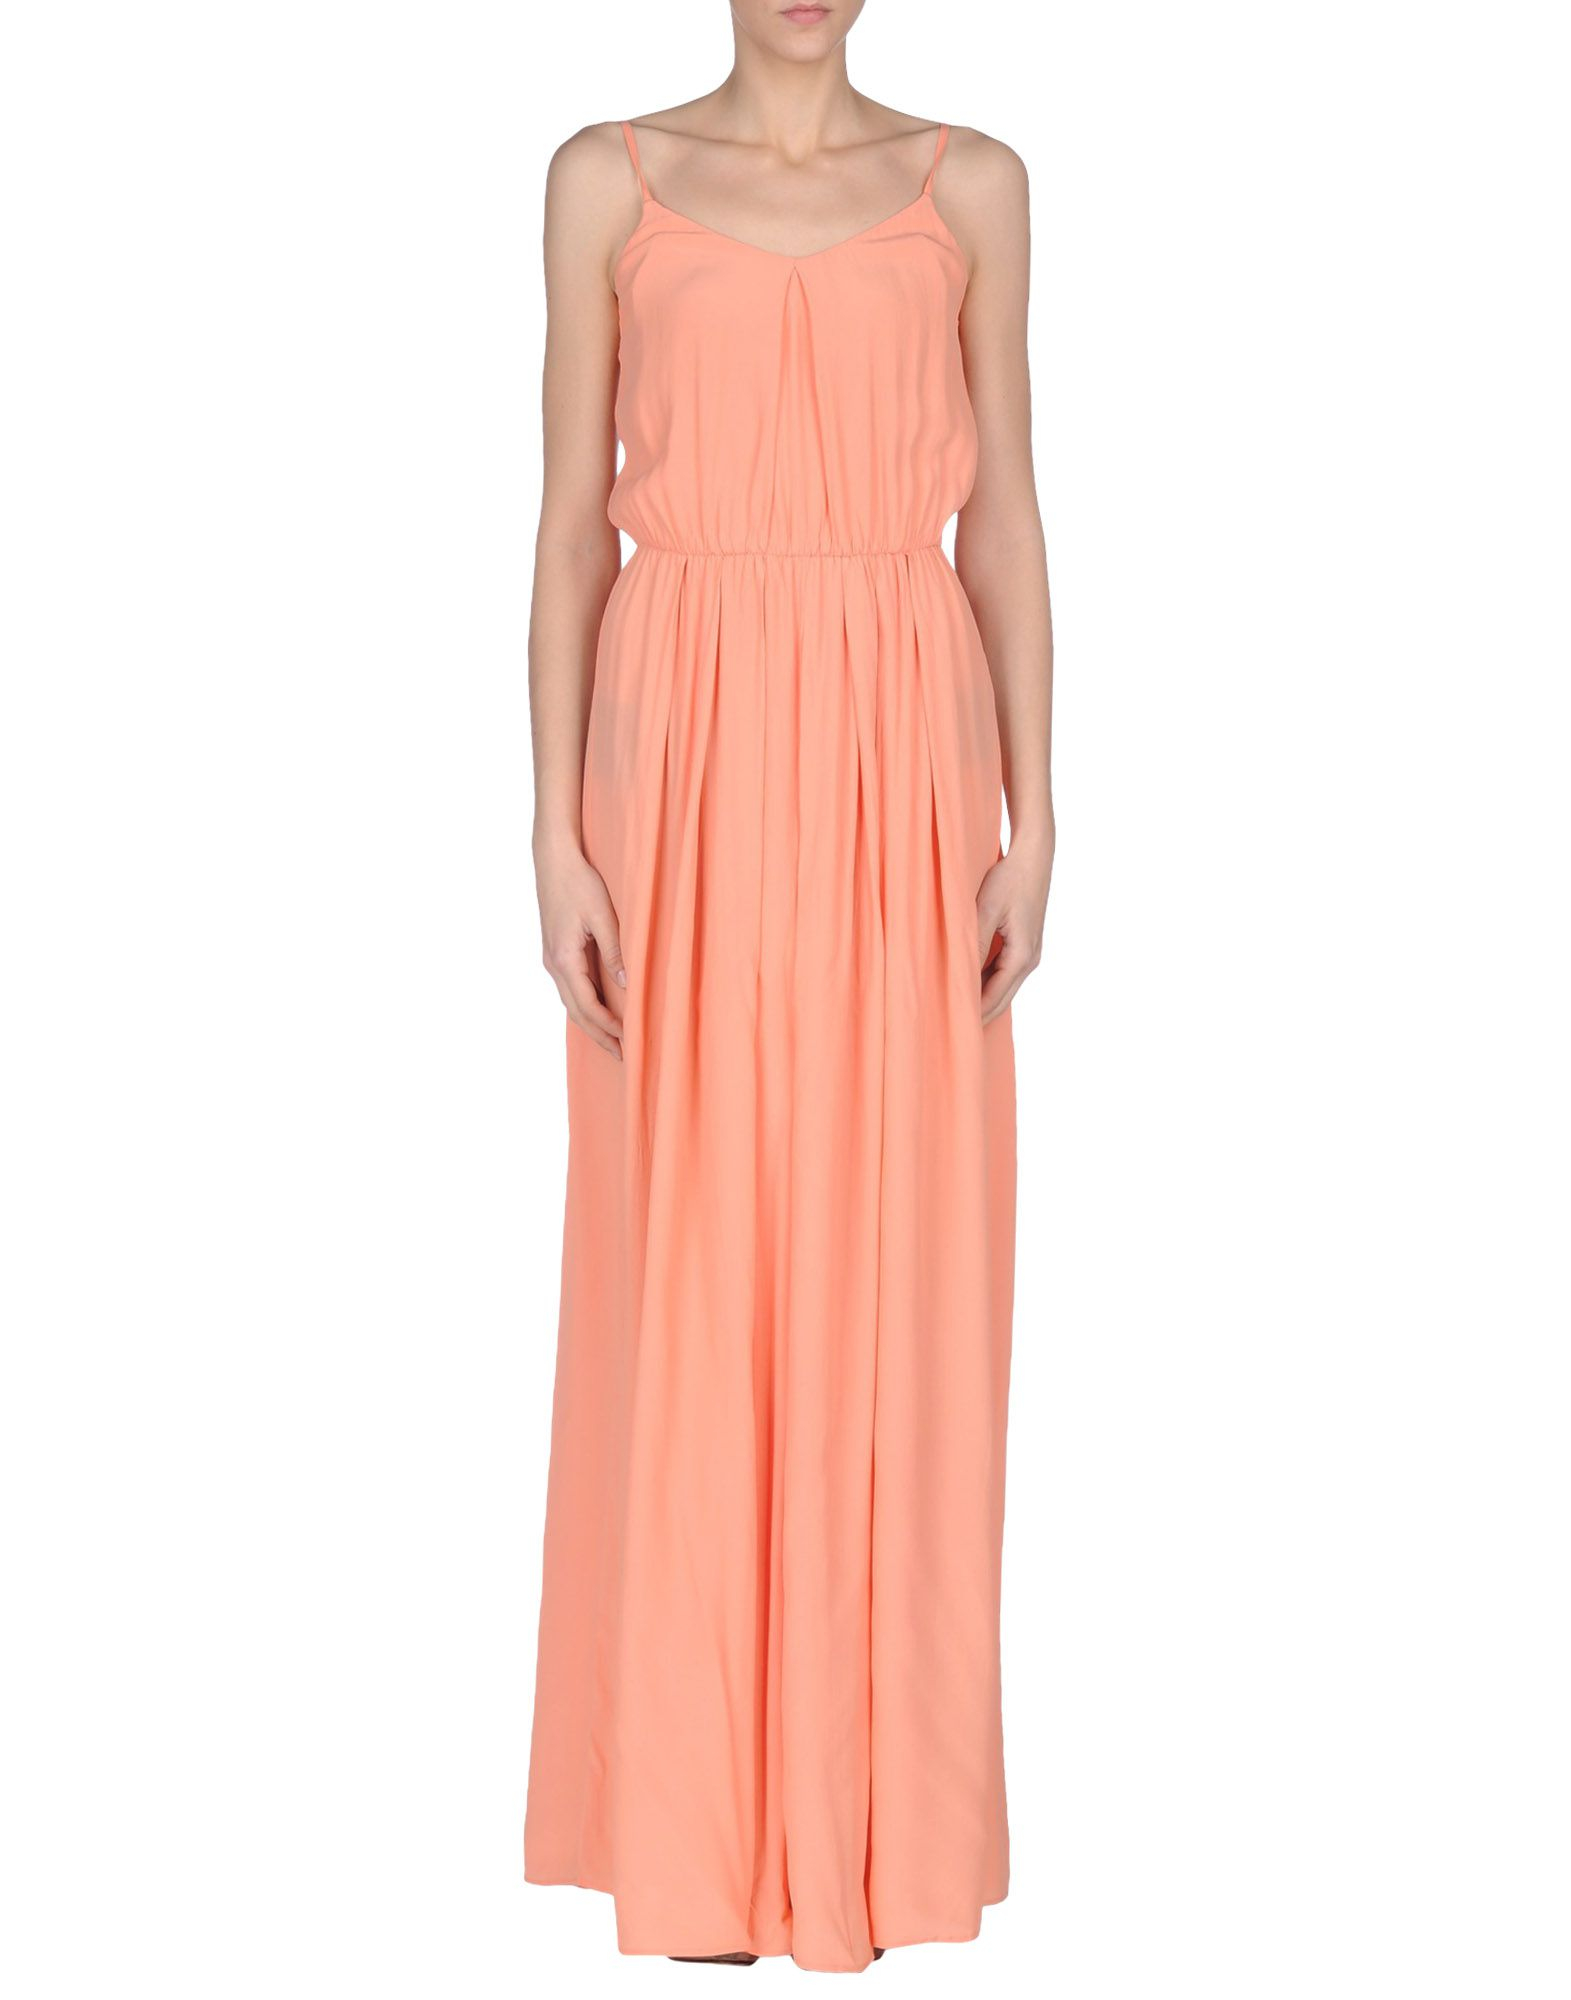 Patrizia pepe Long Dress in Orange (Apricot) | Lyst